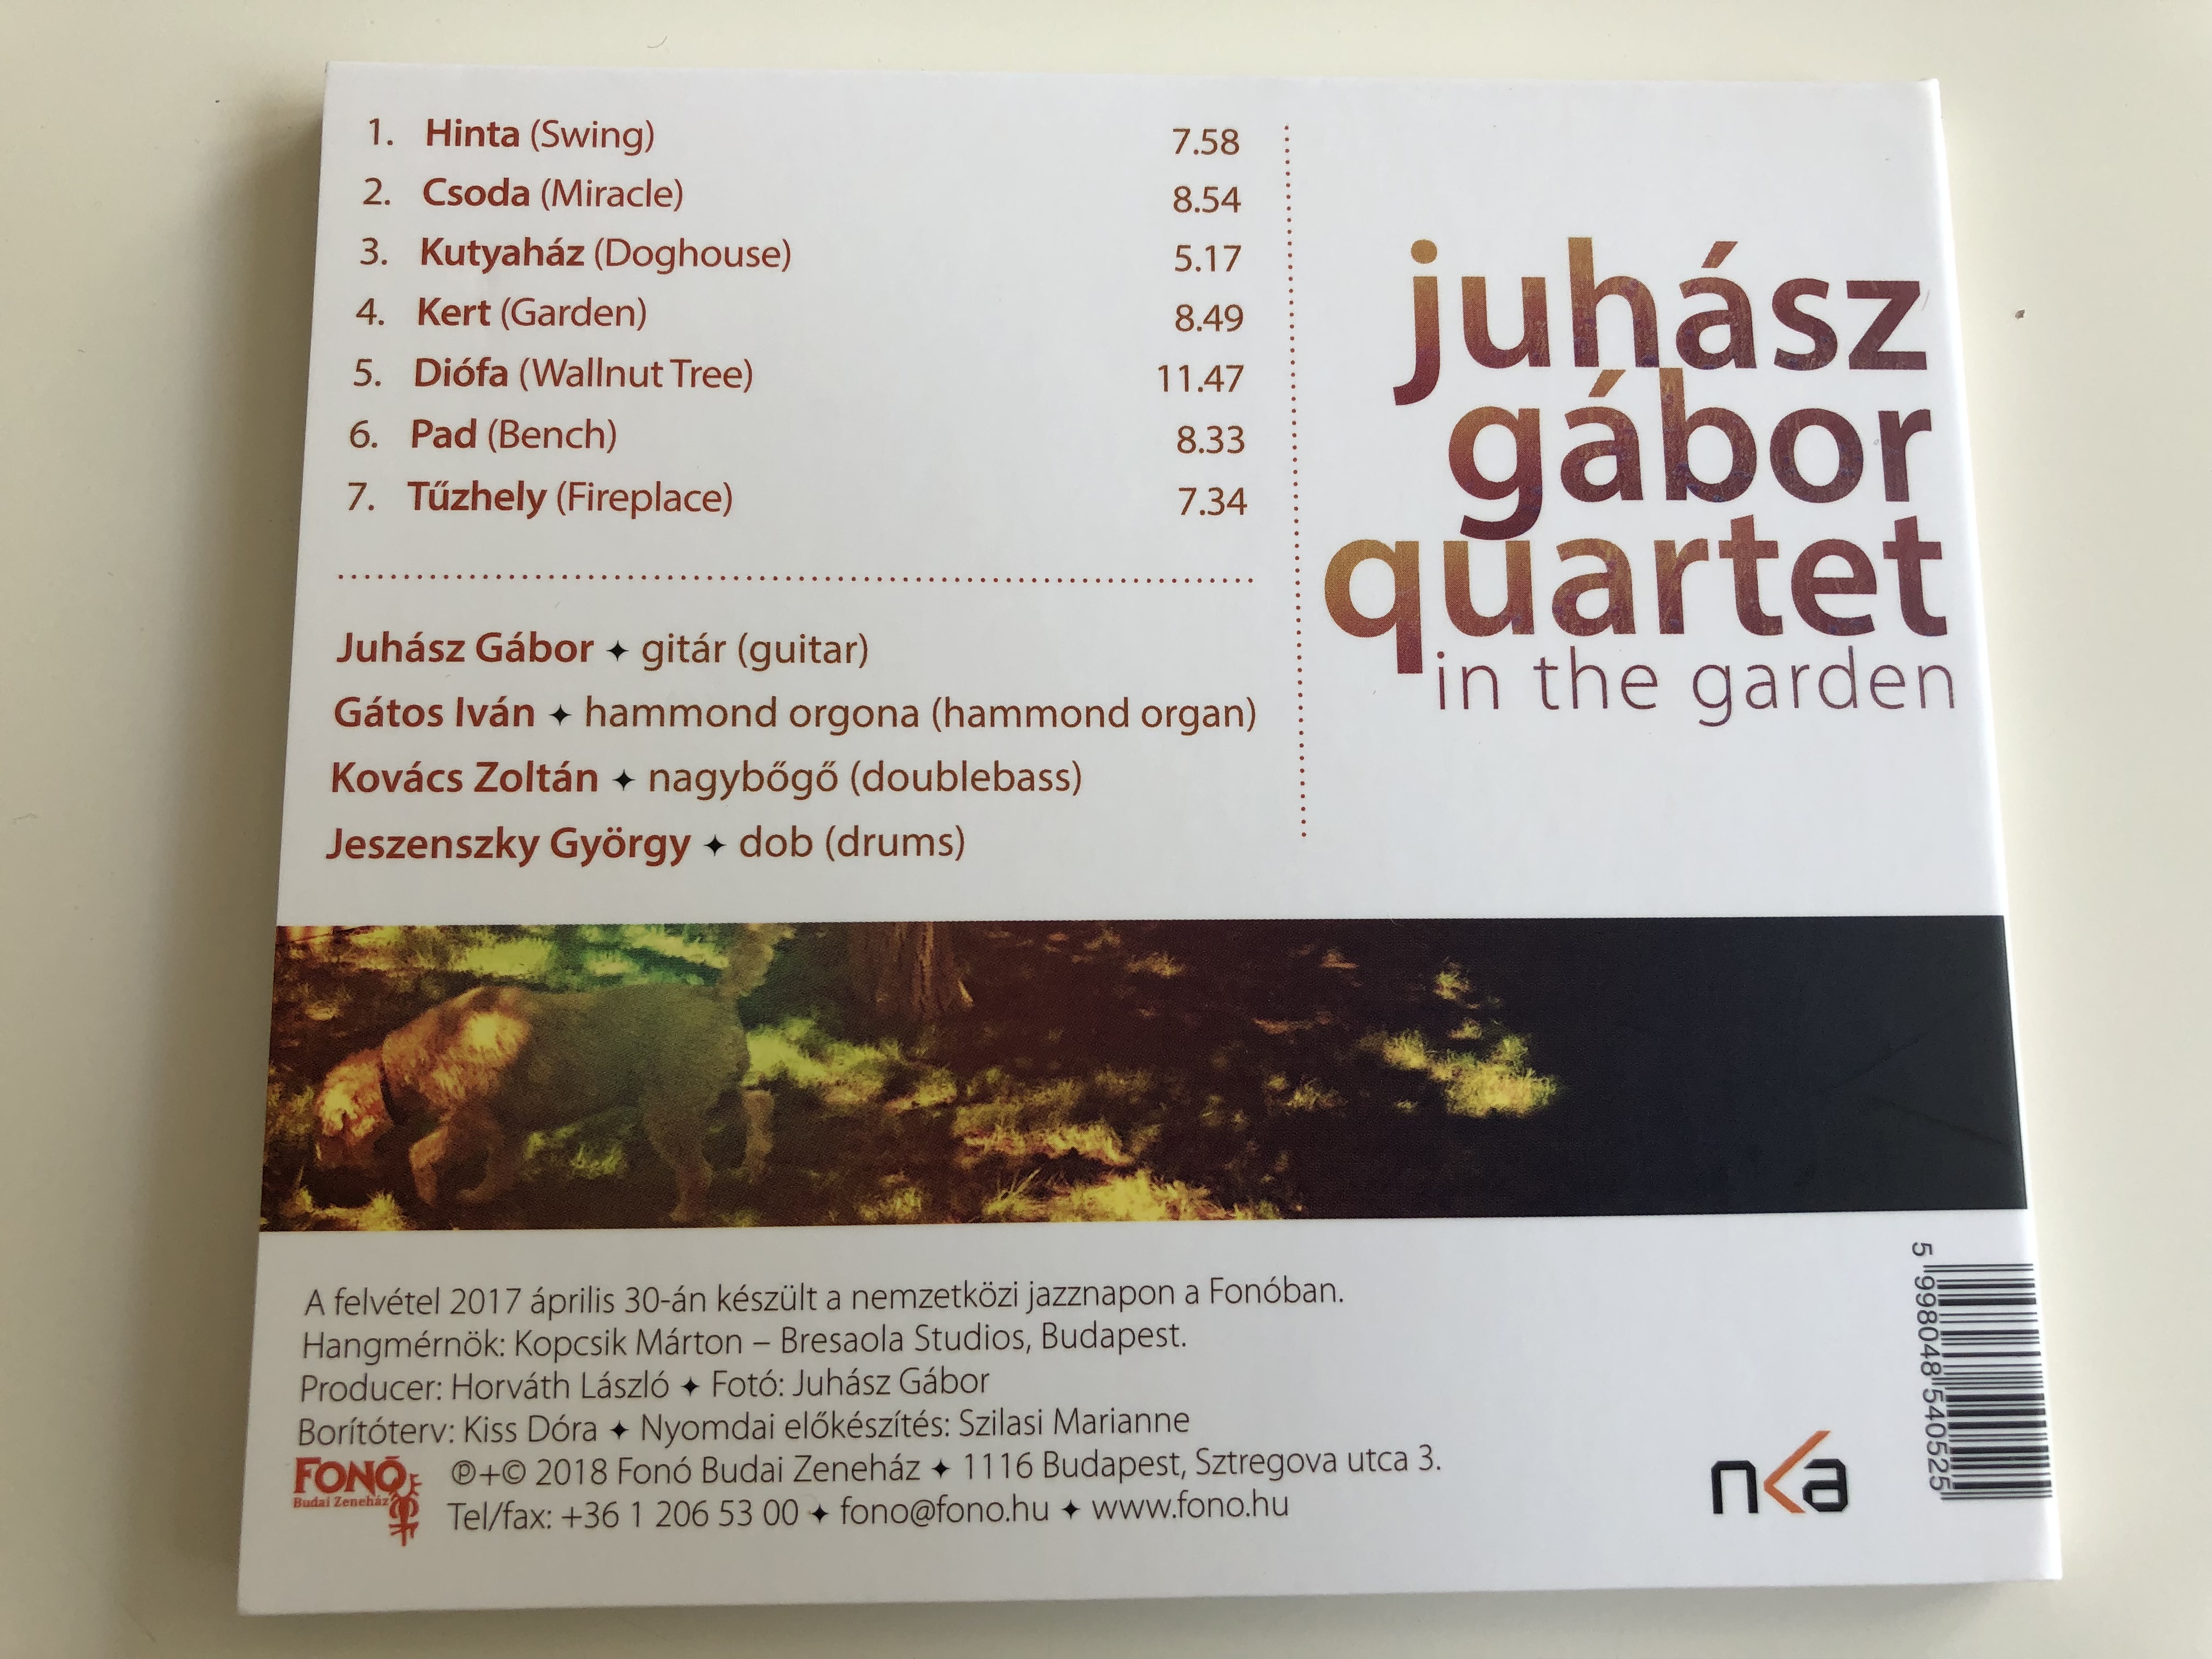 juh-sz-g-bor-quartet-in-the-garden-audio-cd-2018-juh-sz-g-bor-guitar-g-tos-iv-n-hammond-organ-kov-cs-zolt-n-doublebass-jeszenyszky-gy-rgy-drums-5-.jpg